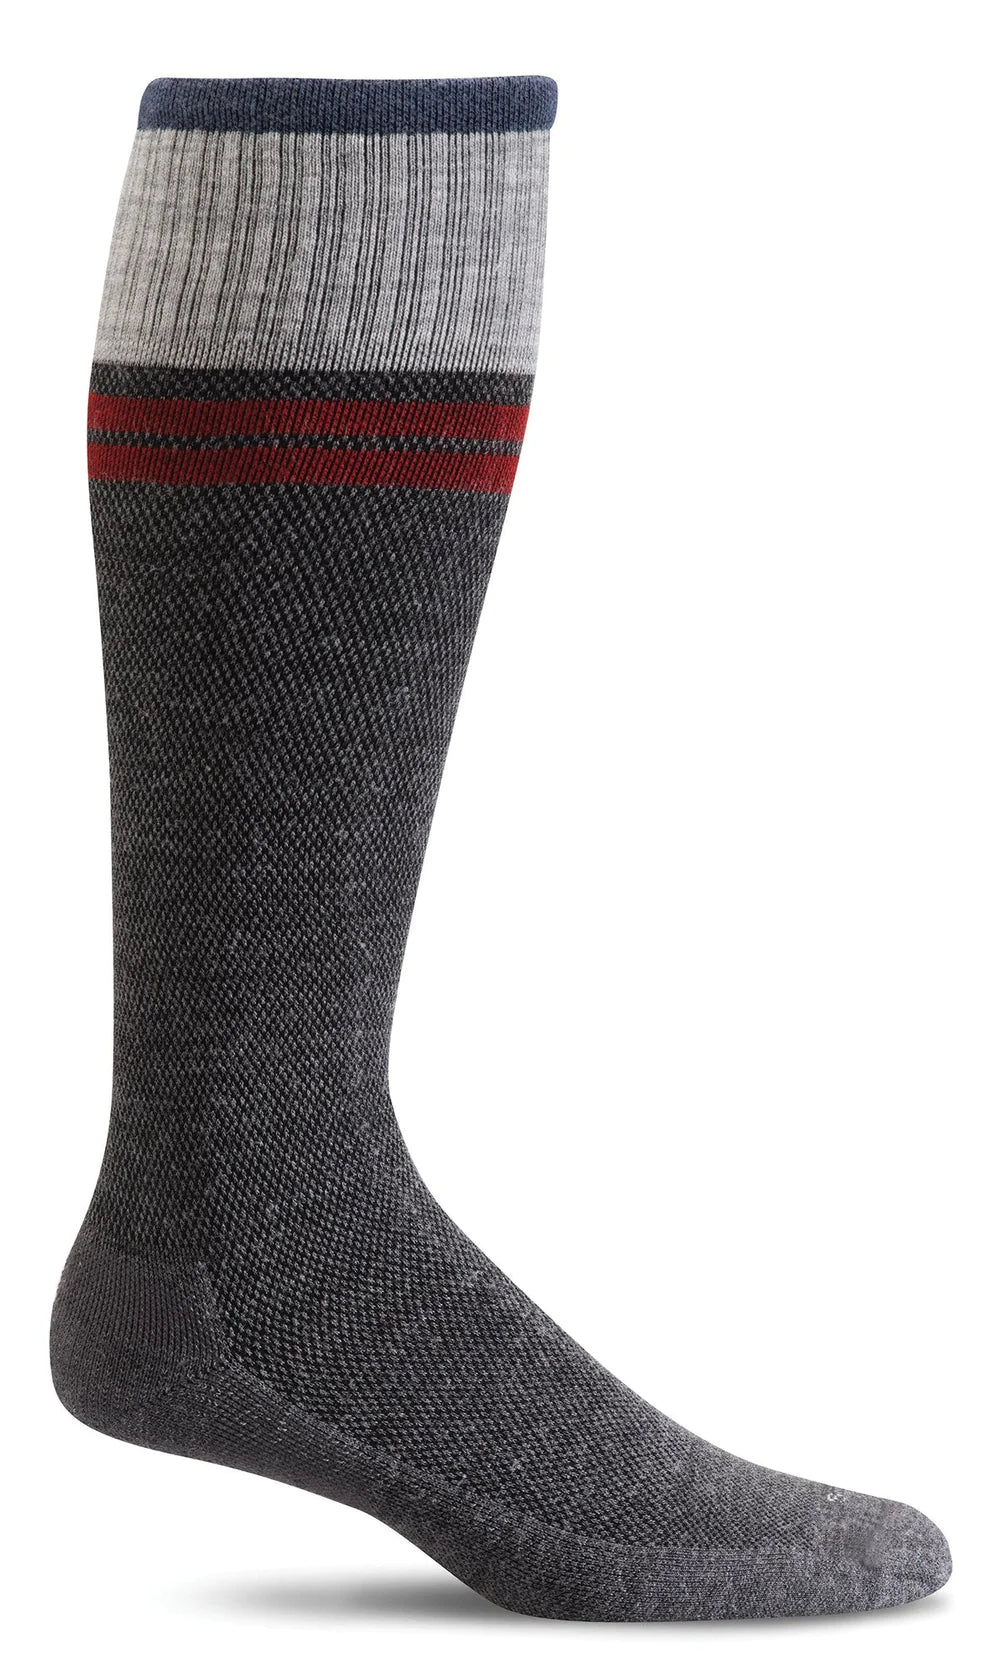 Sportster Men's Bamboo/Merino Moderate Compression Socks